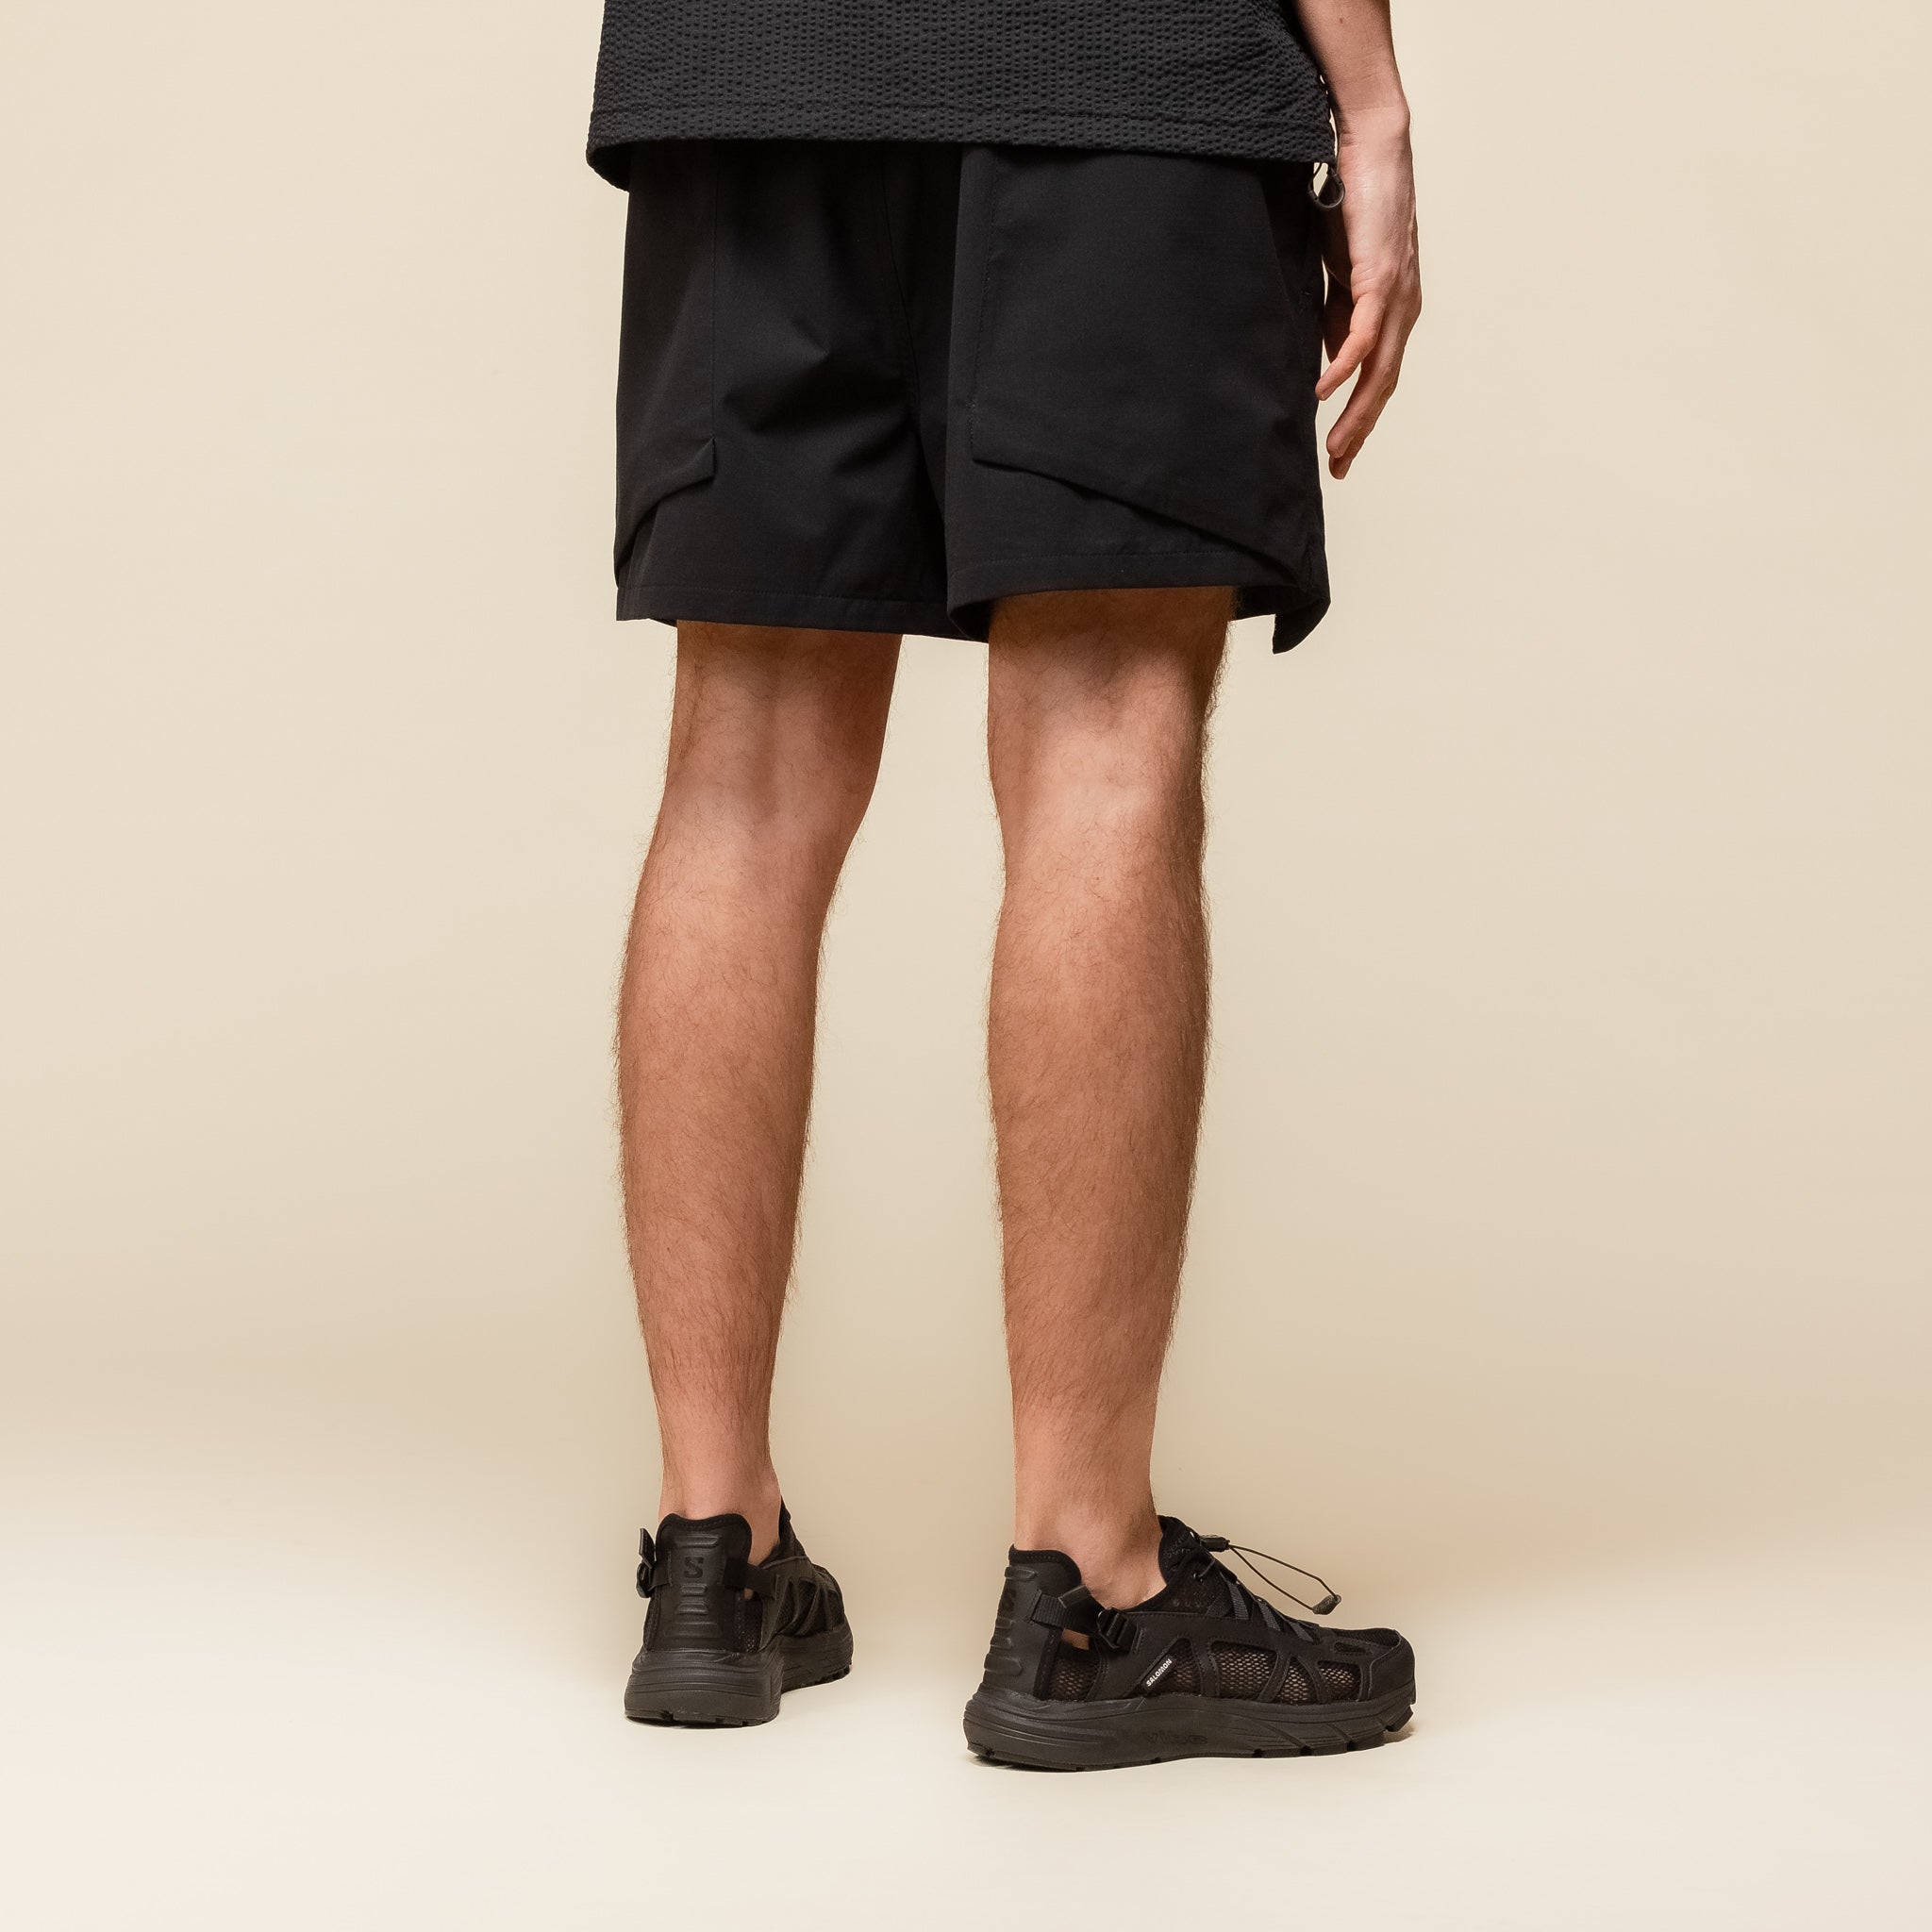 CMF Outdoor Garment - New Bug Shorts - Black